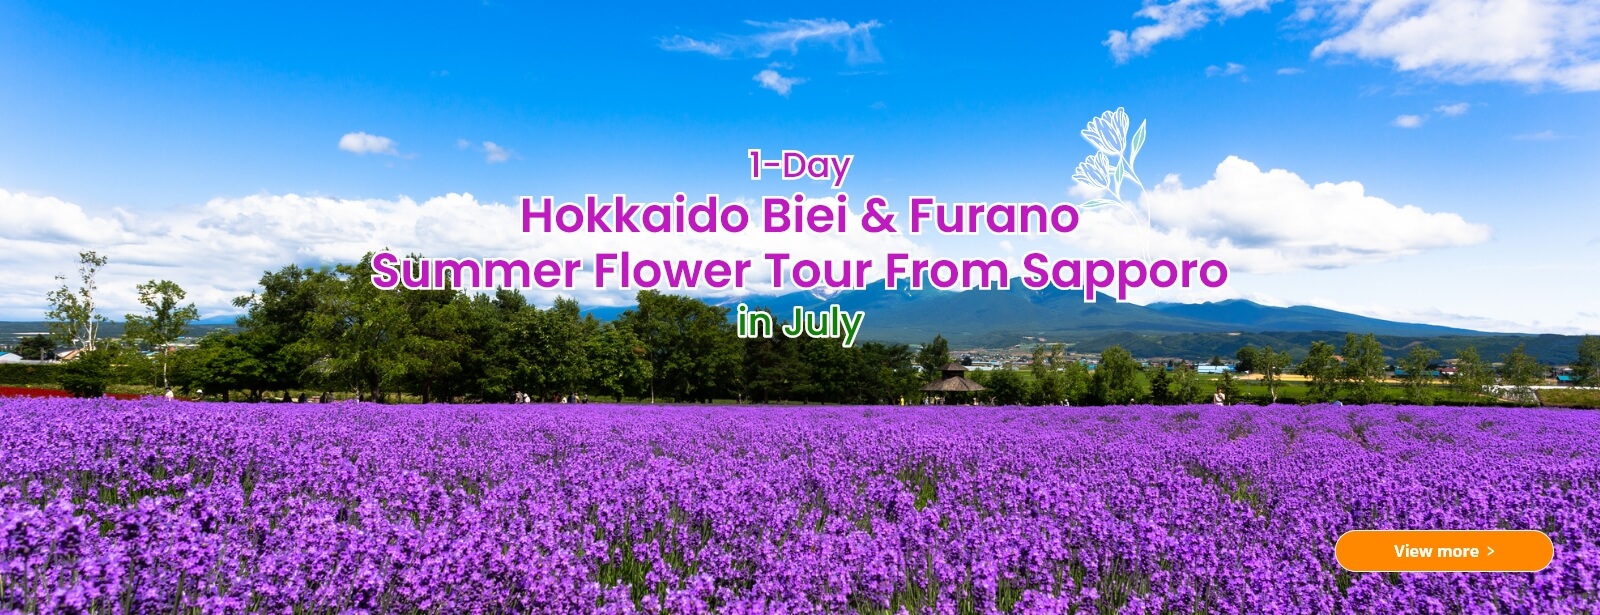 1-Day Hokkaido Biei & Furano Spring Flower Tour From Sapporo in June